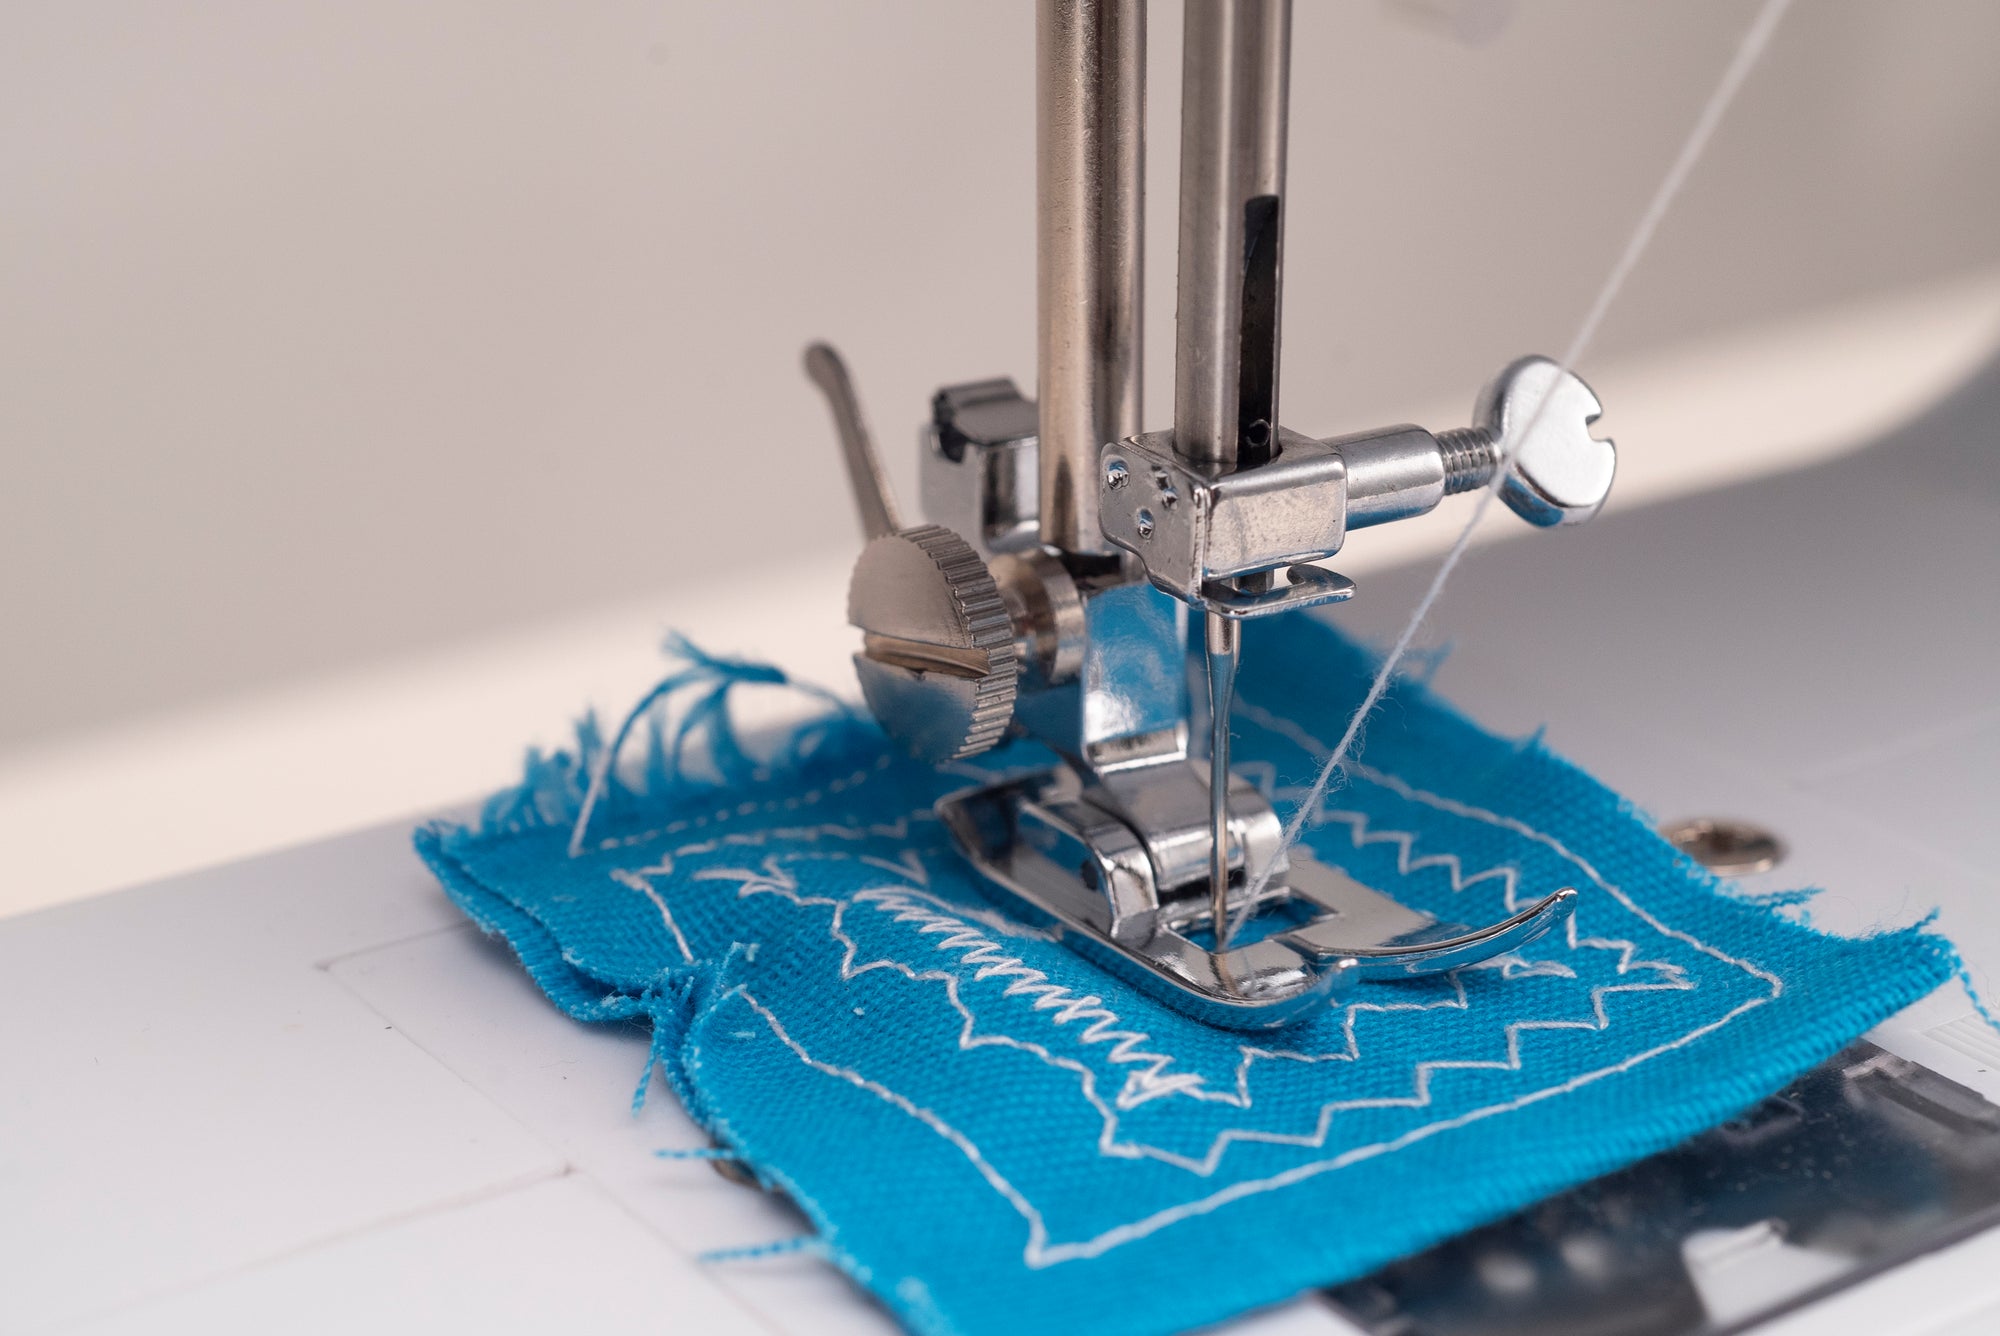 Lil Sew & Sew LSS-202 Mini Sewing Machine with Sewing Kit